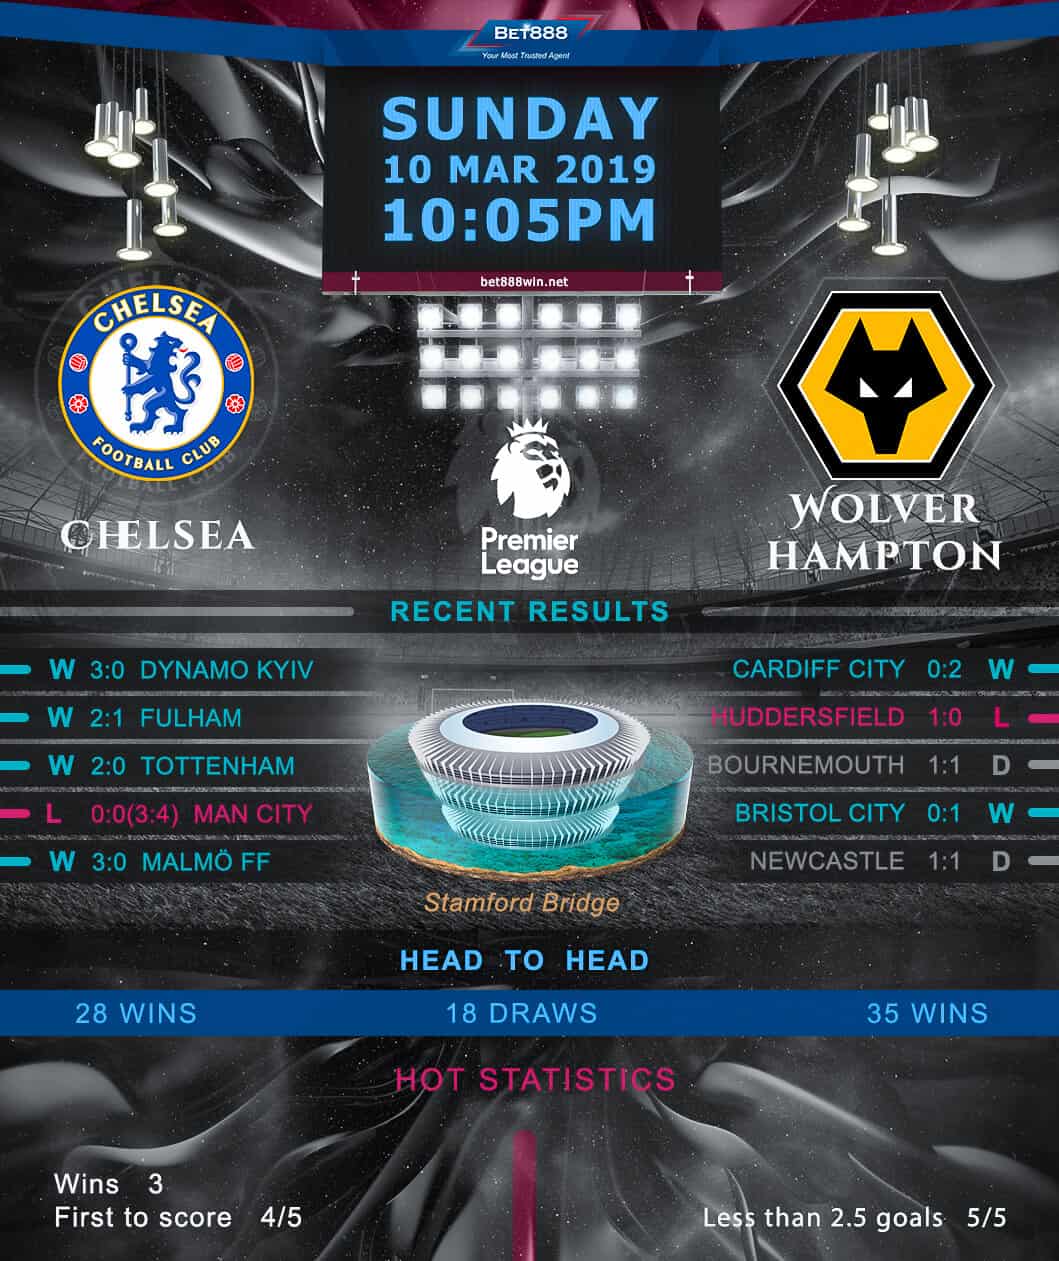 Chelsea vs Wolverhampton Wanderers 10/03/19